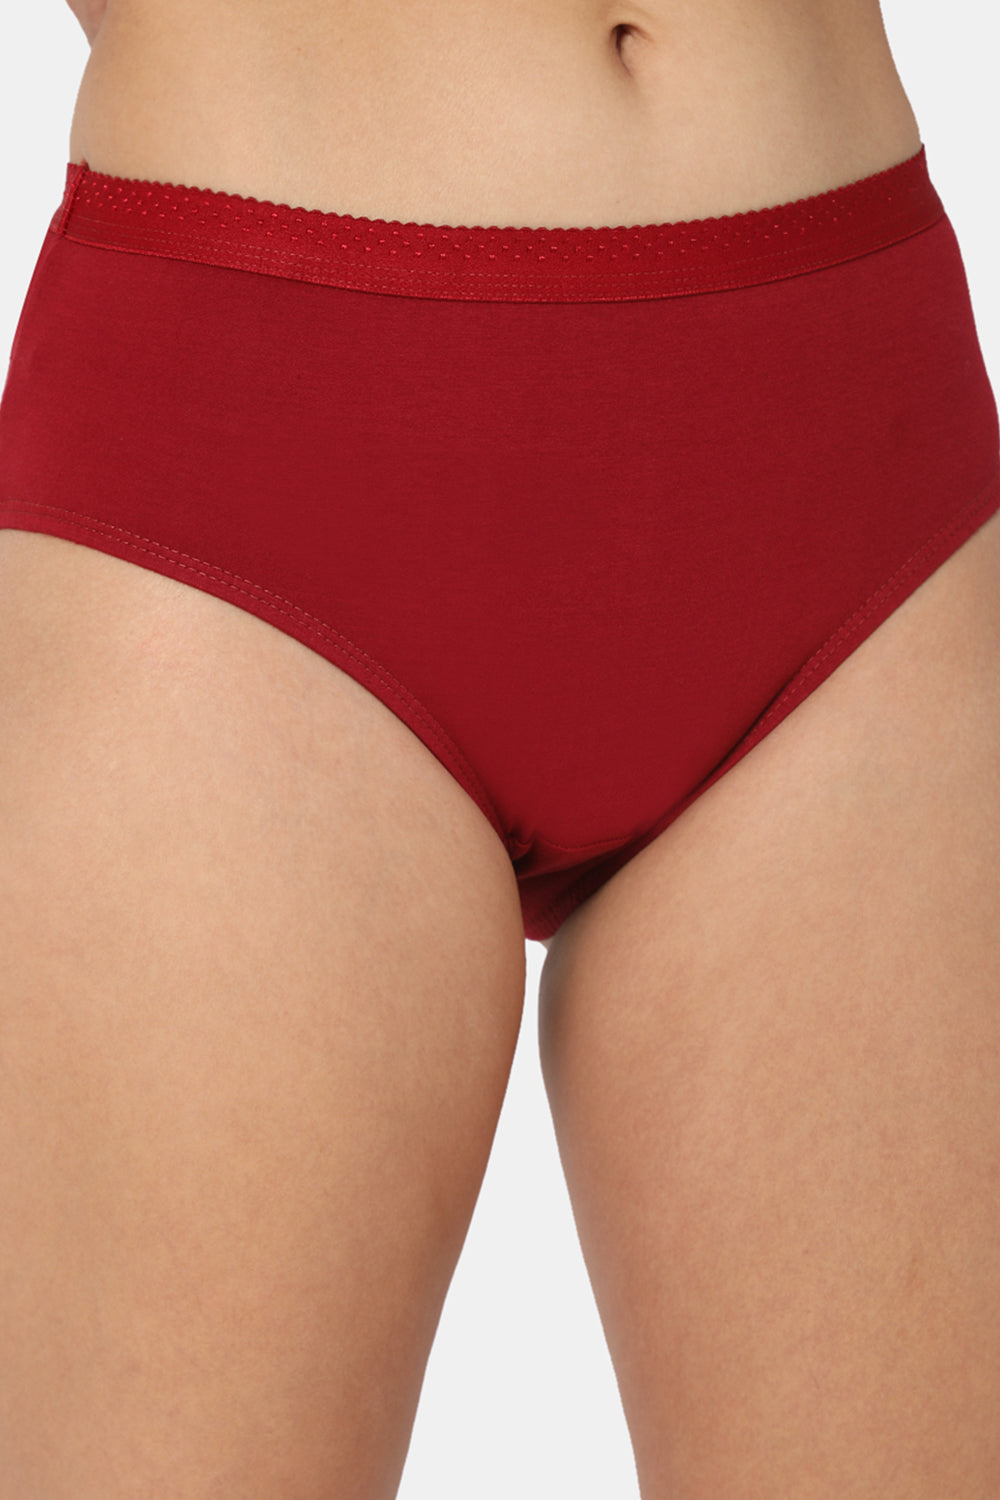 Cotton Panties for Women  Buy Pure Cotton Panties Online